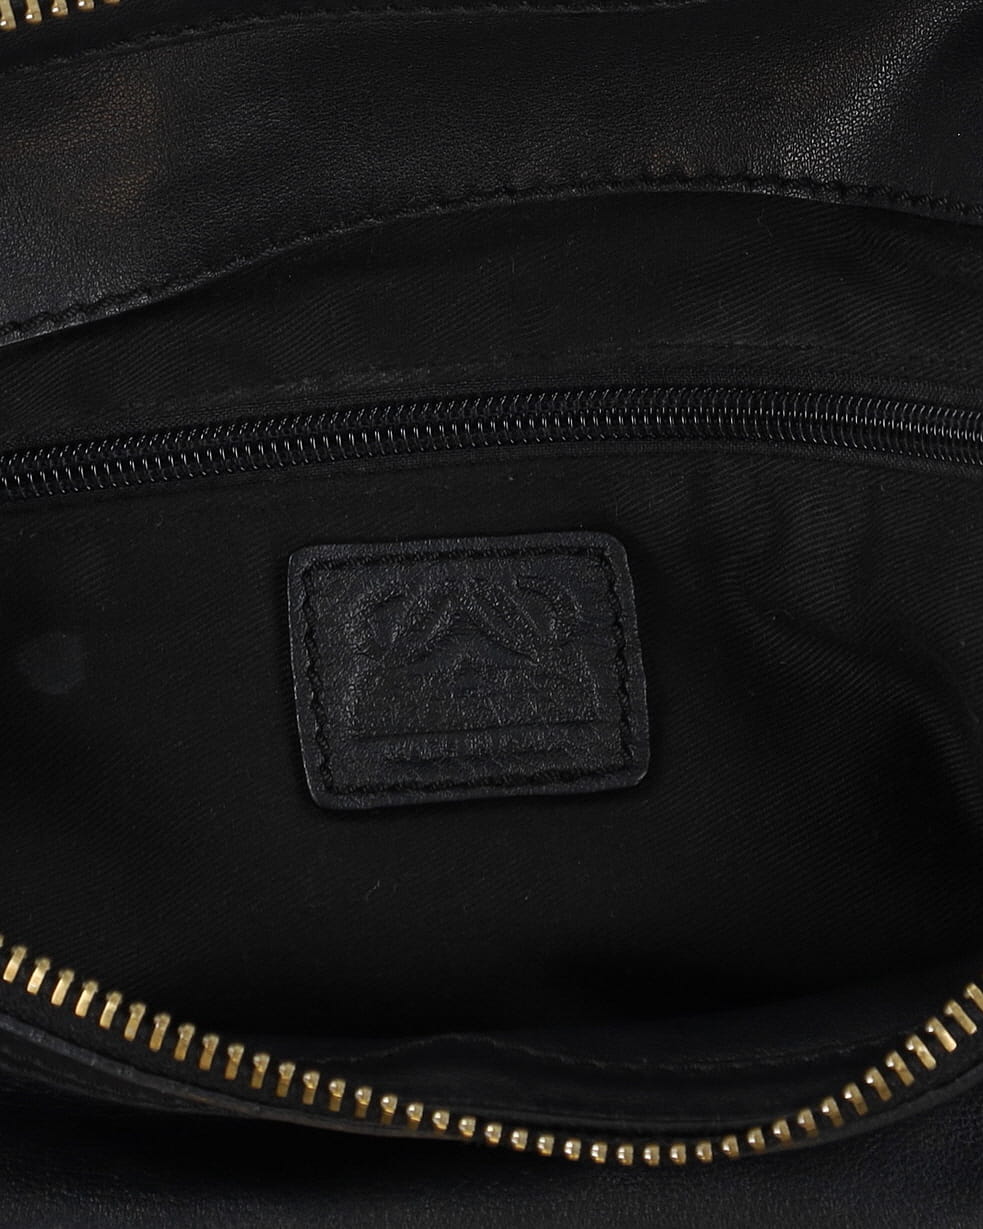 Loewe Black Leather Handbag - One Size